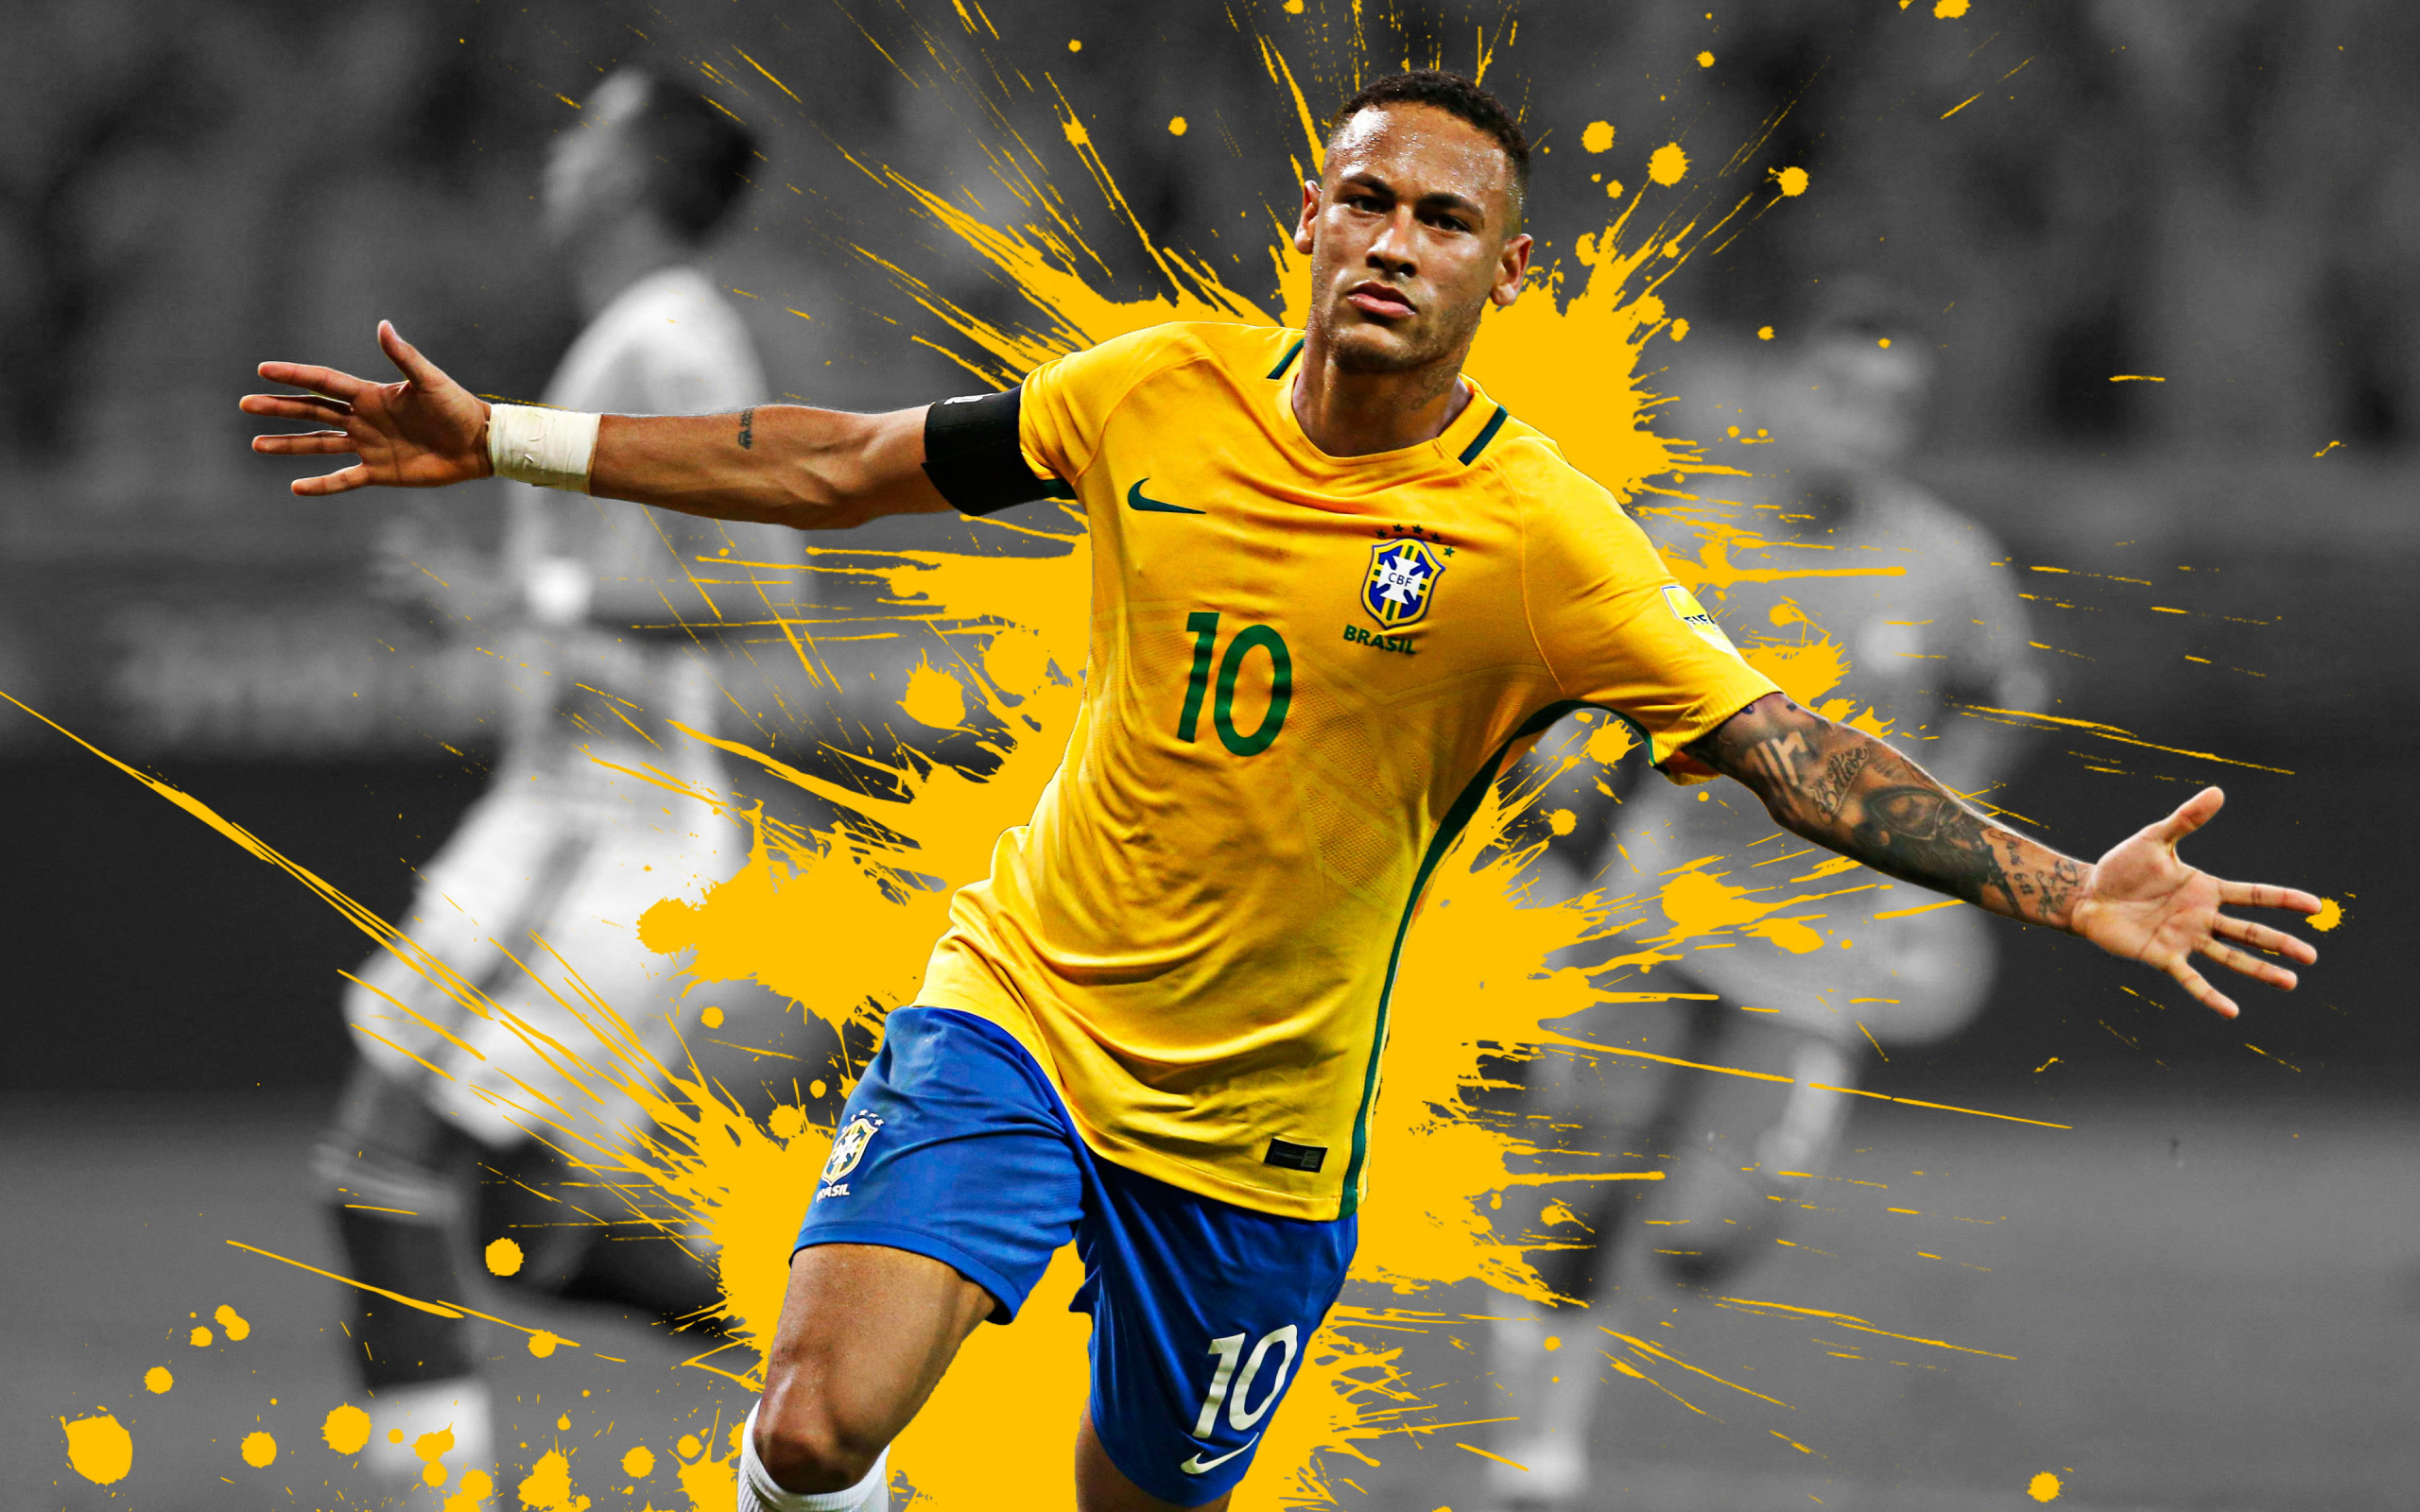 Download wallpaper: Neymar for Brazil national team 2560x1600